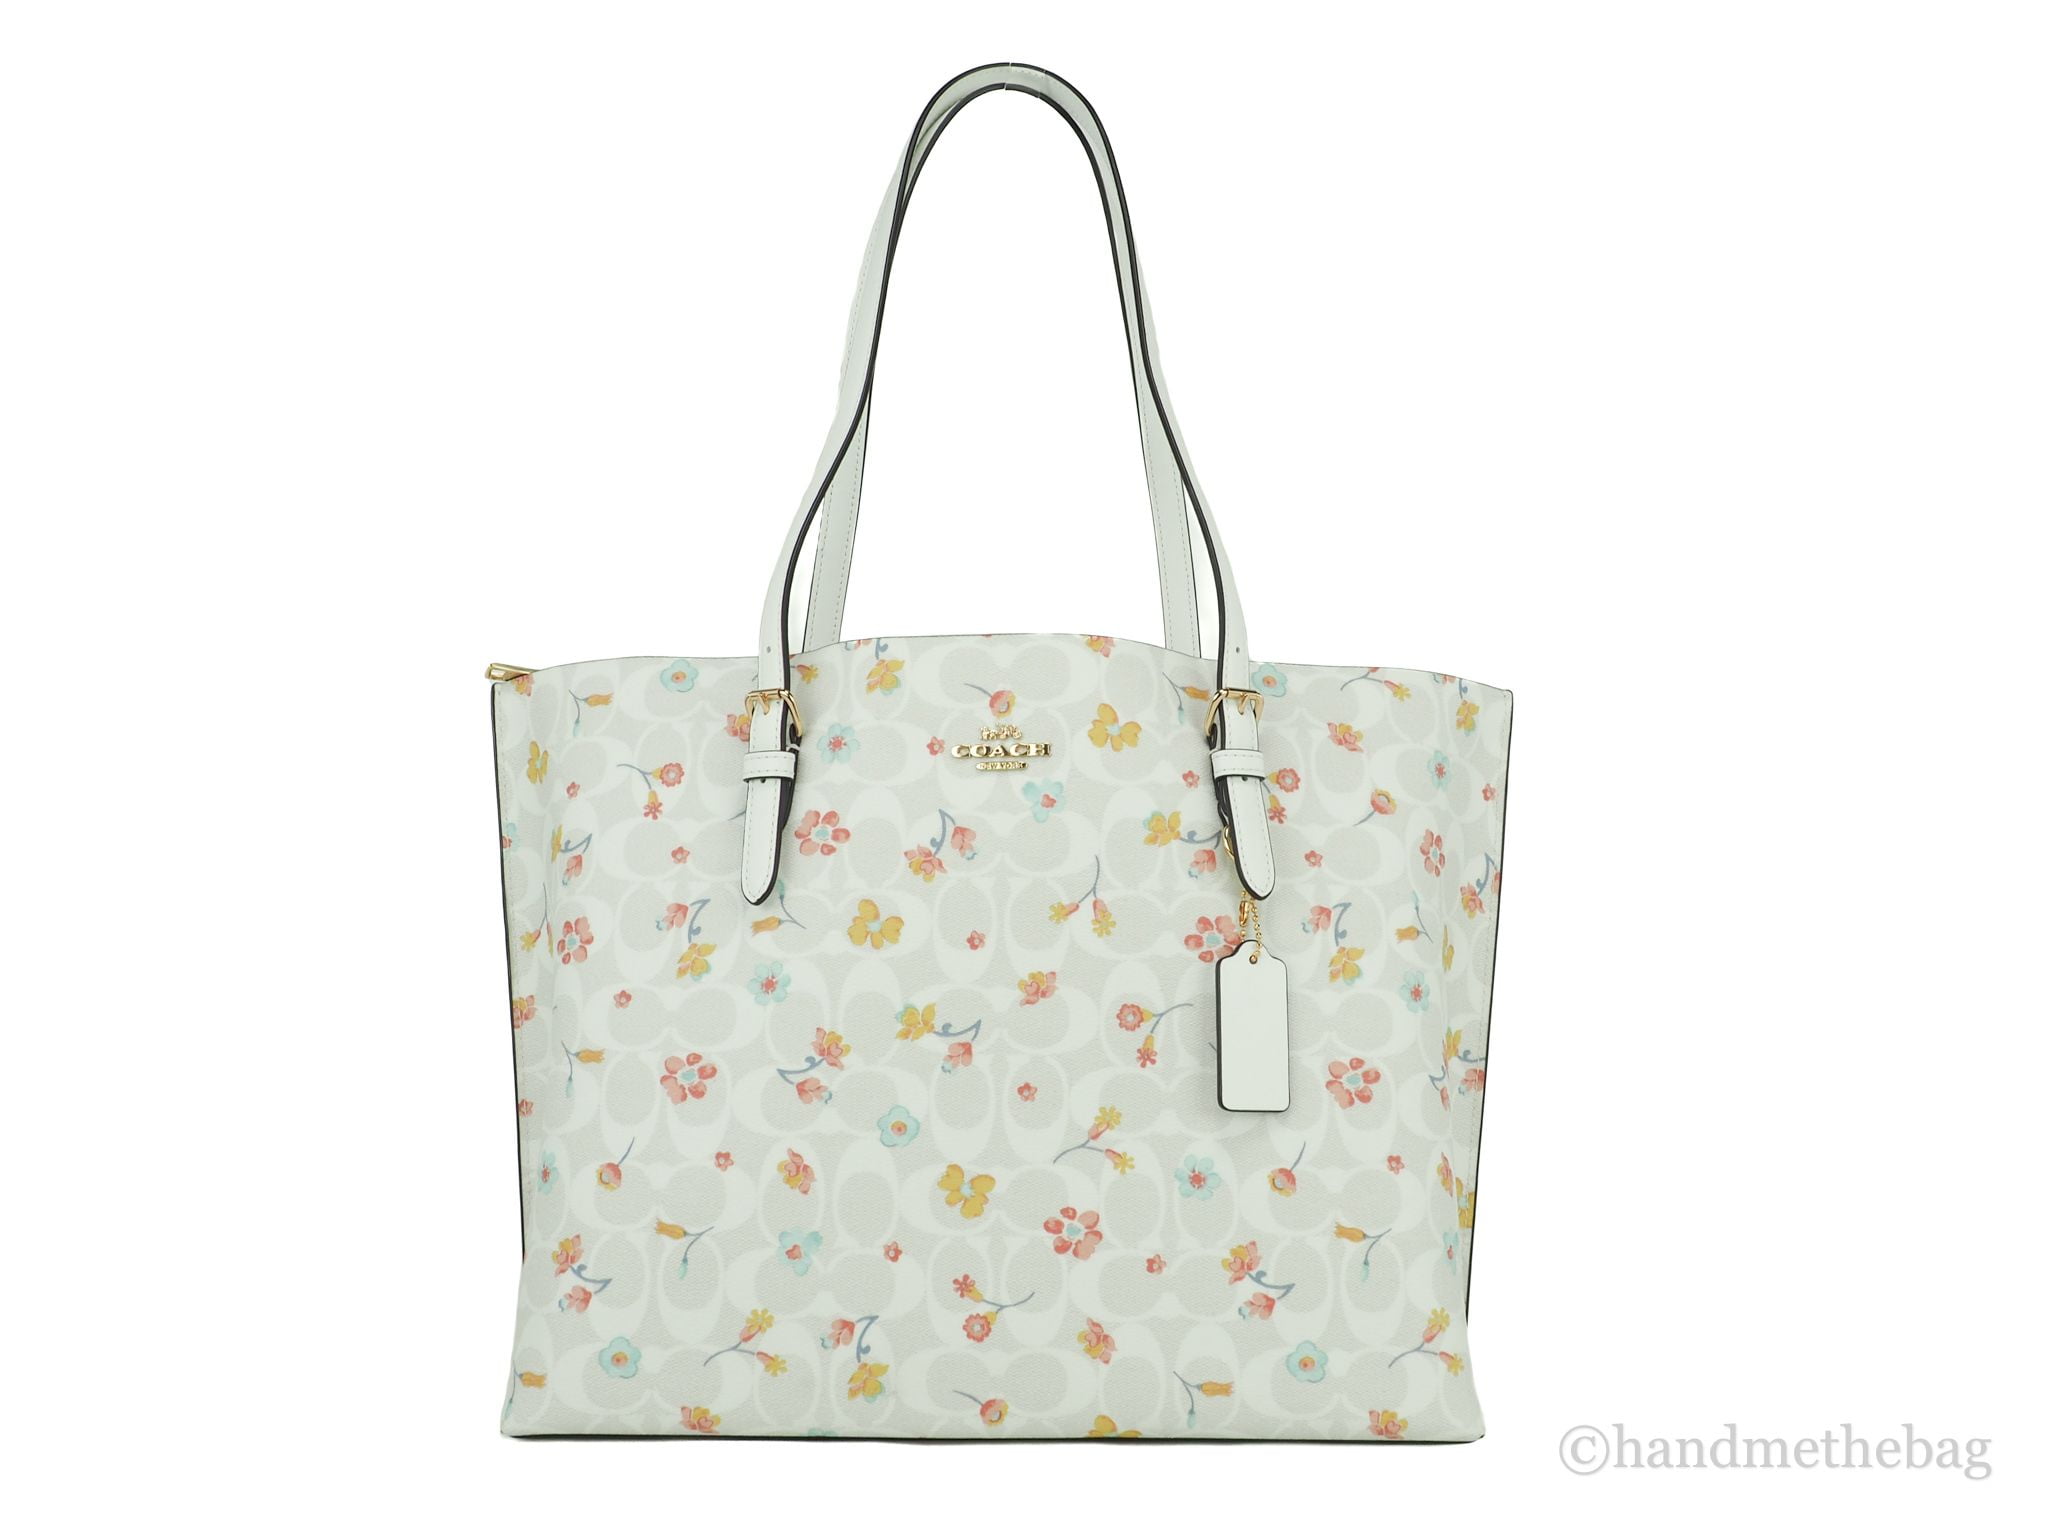 Coach City Women's Leather Tote Bag - Pop Floral Print for sale online |  eBay